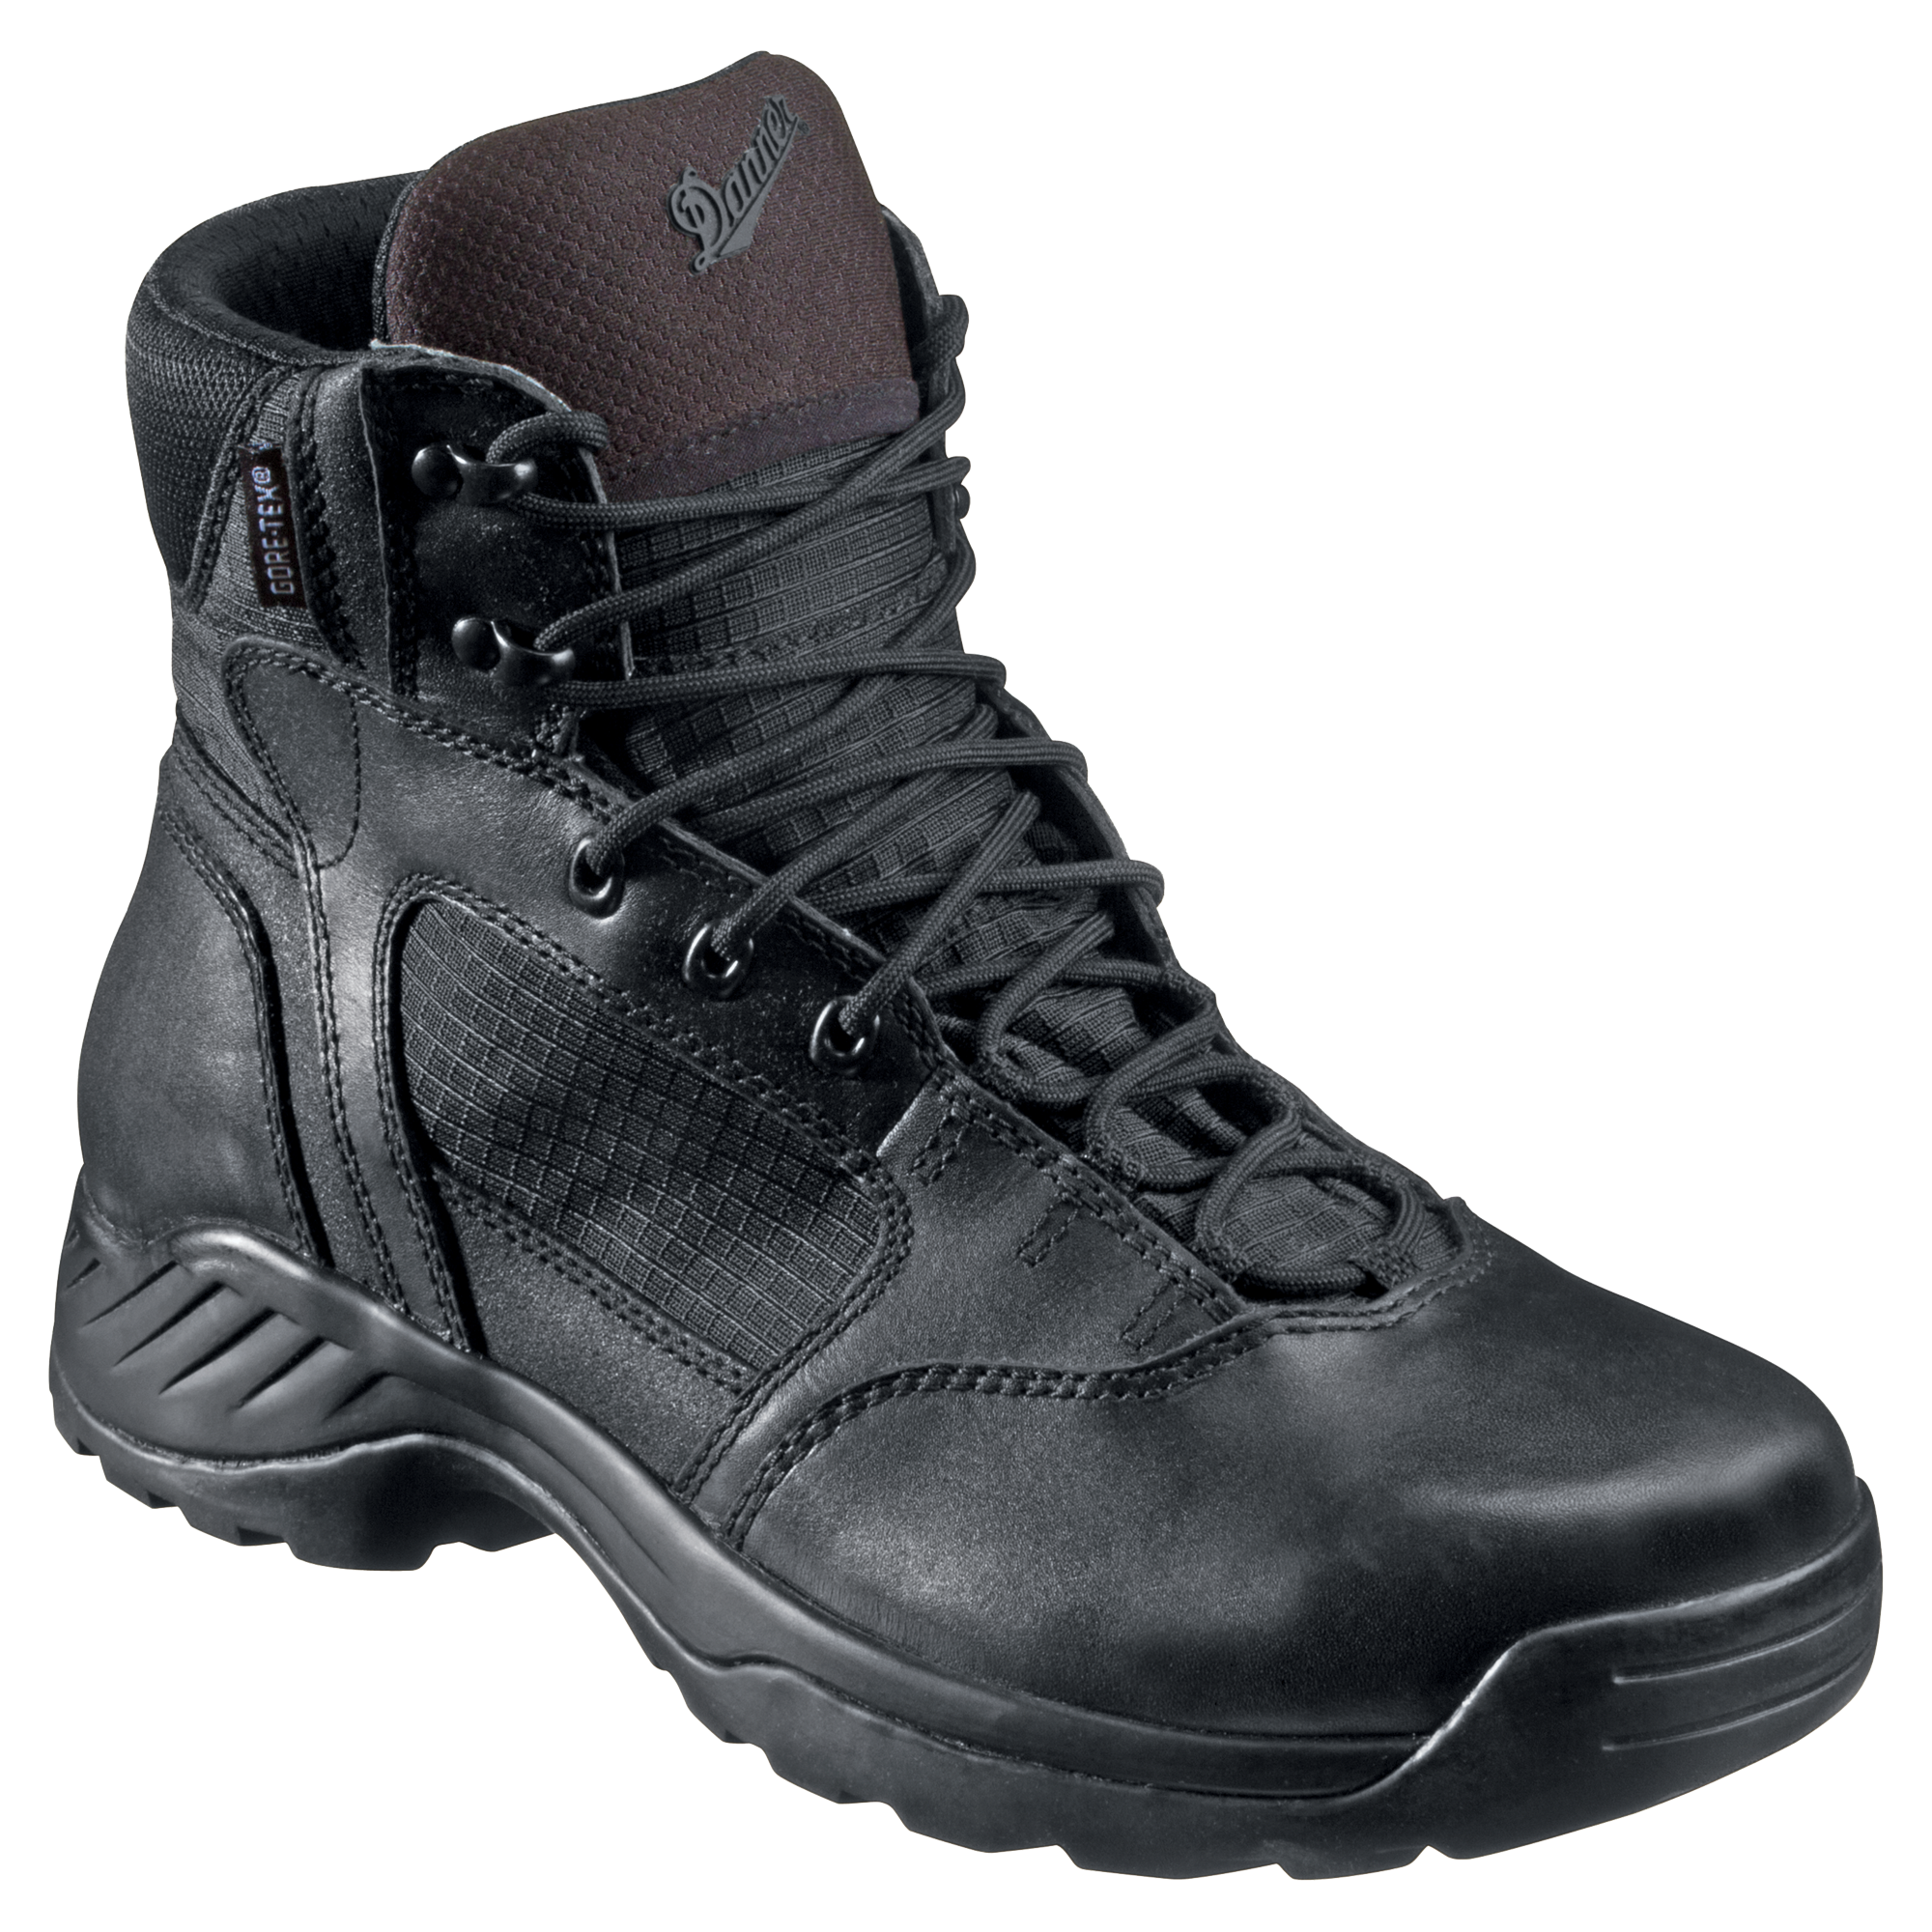 Danner Kinetic GTX 6'' Side-Zip Waterproof Tactical Duty Boots for Men - Black - 6W